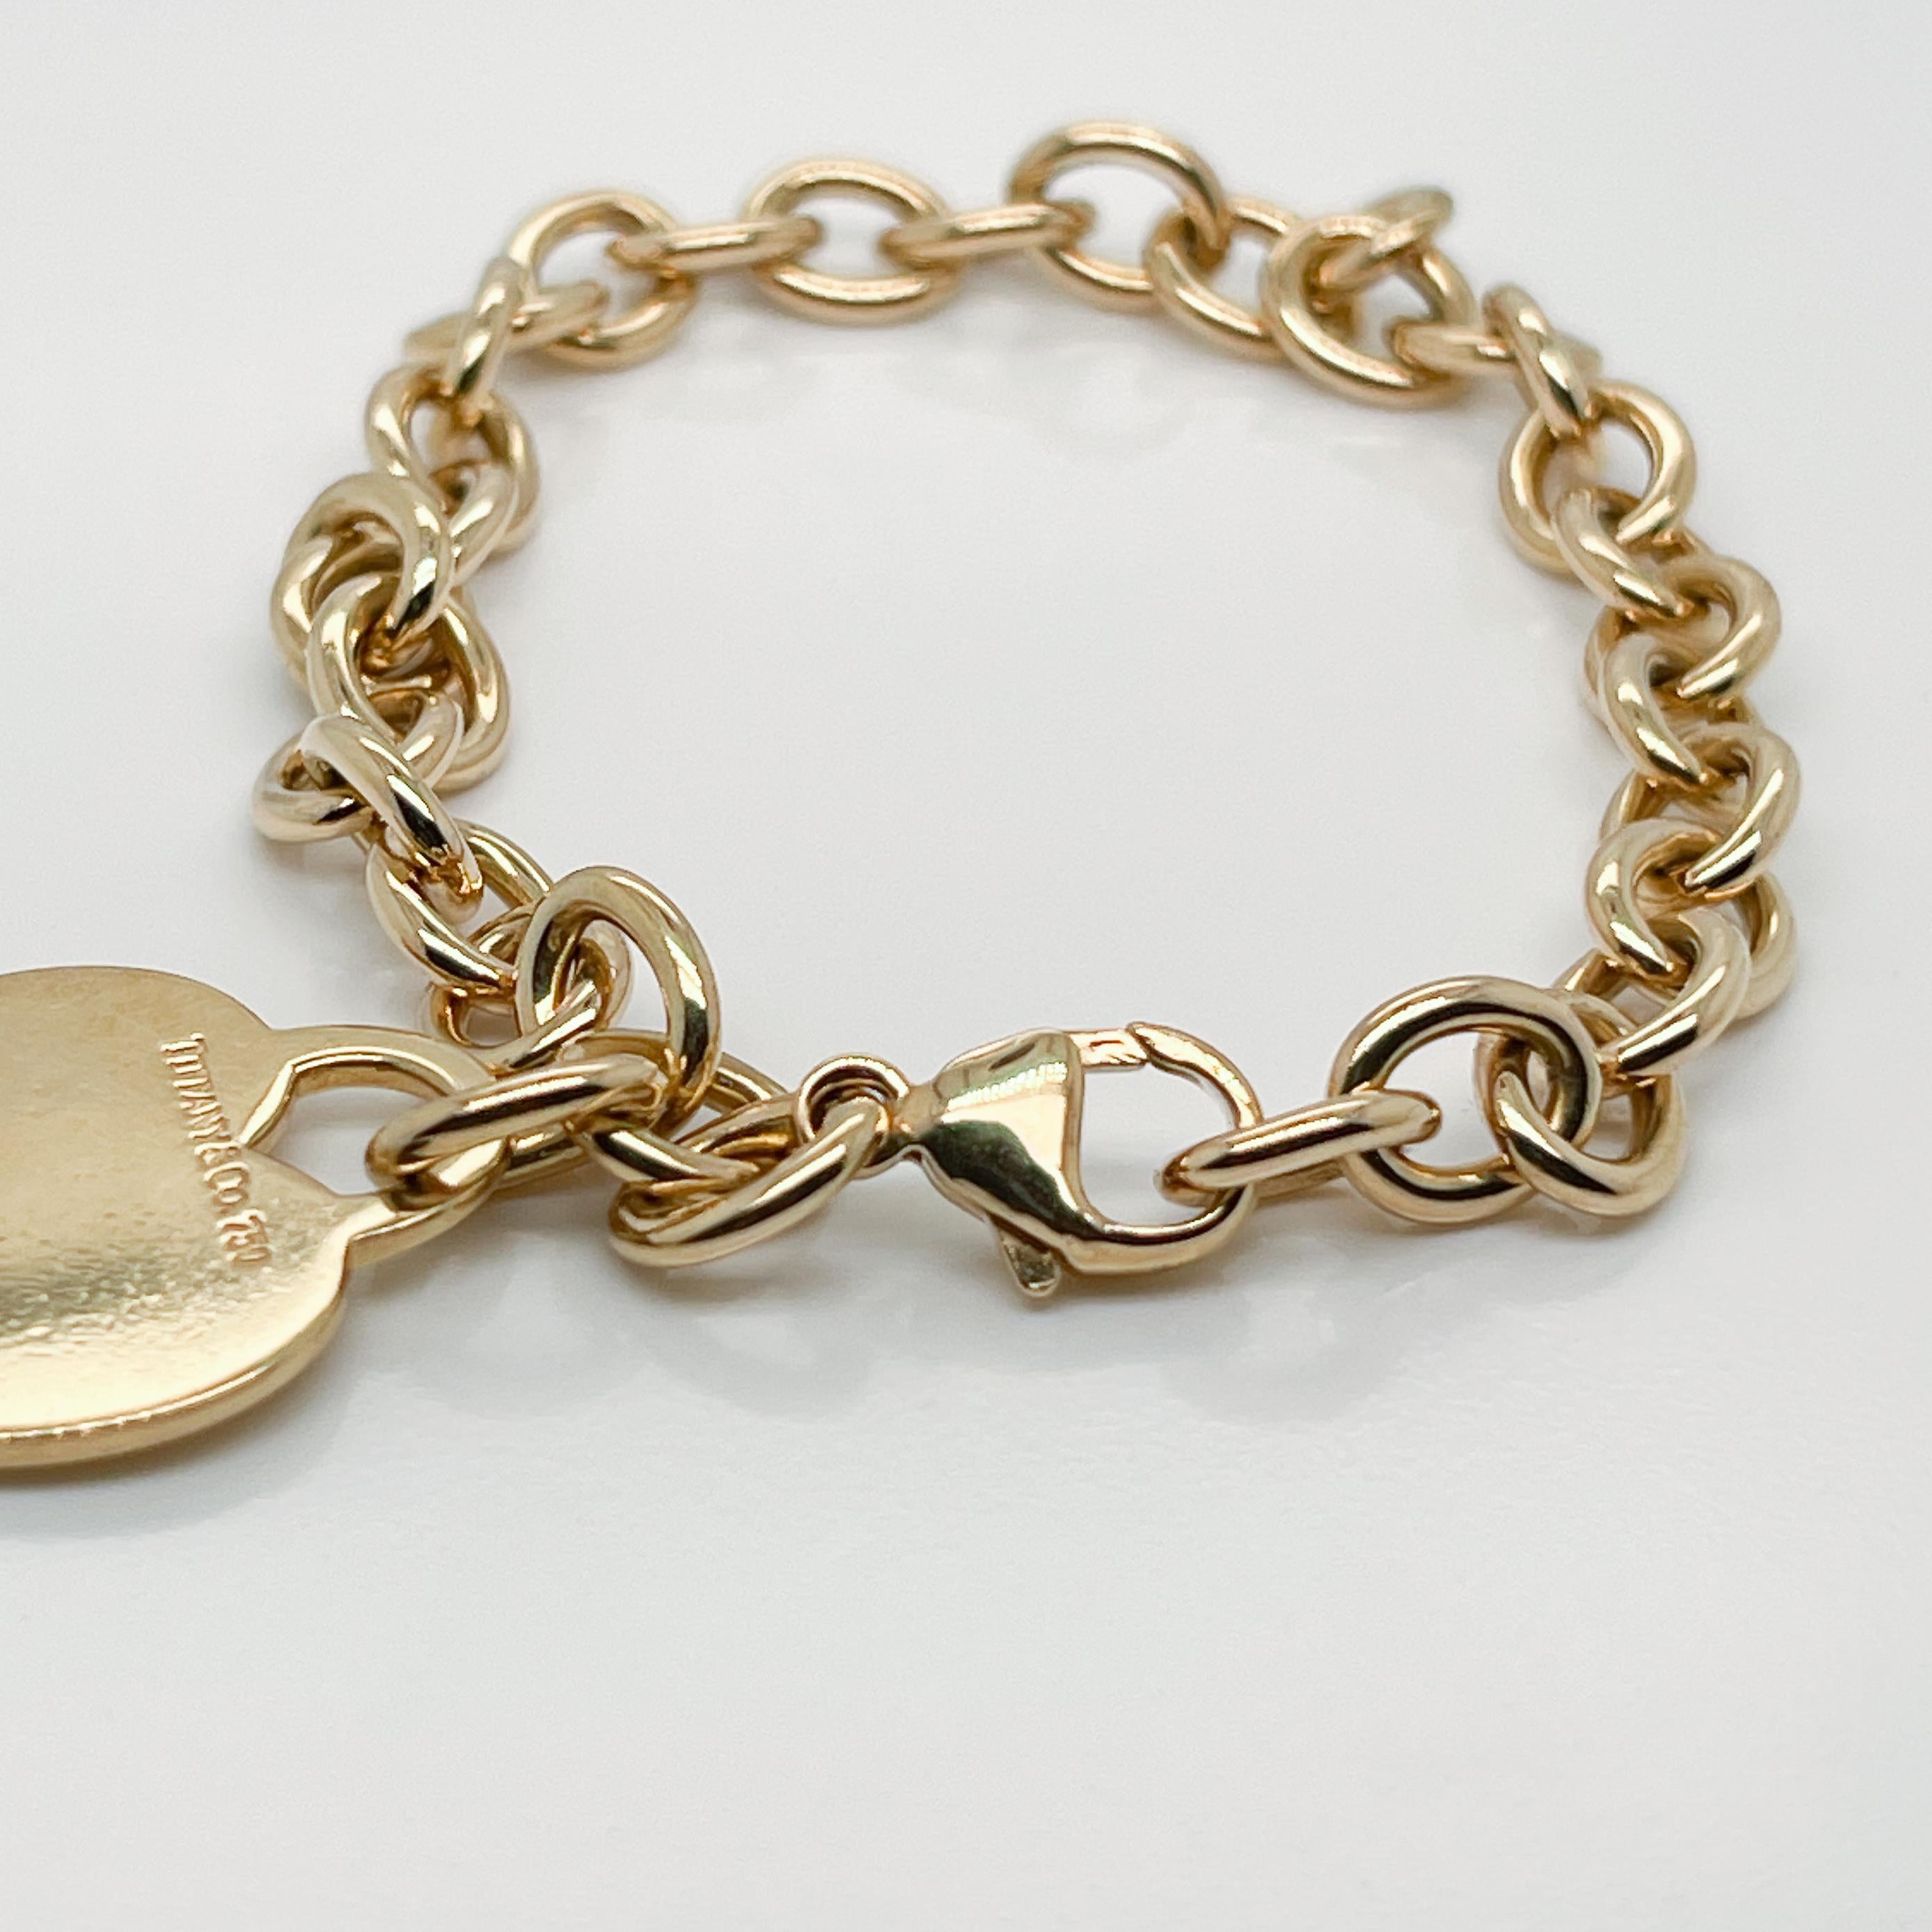 Tiffany & Co. 18 Karat Gold Dog Chain Link Bracelet & Heart Charm For Sale 3